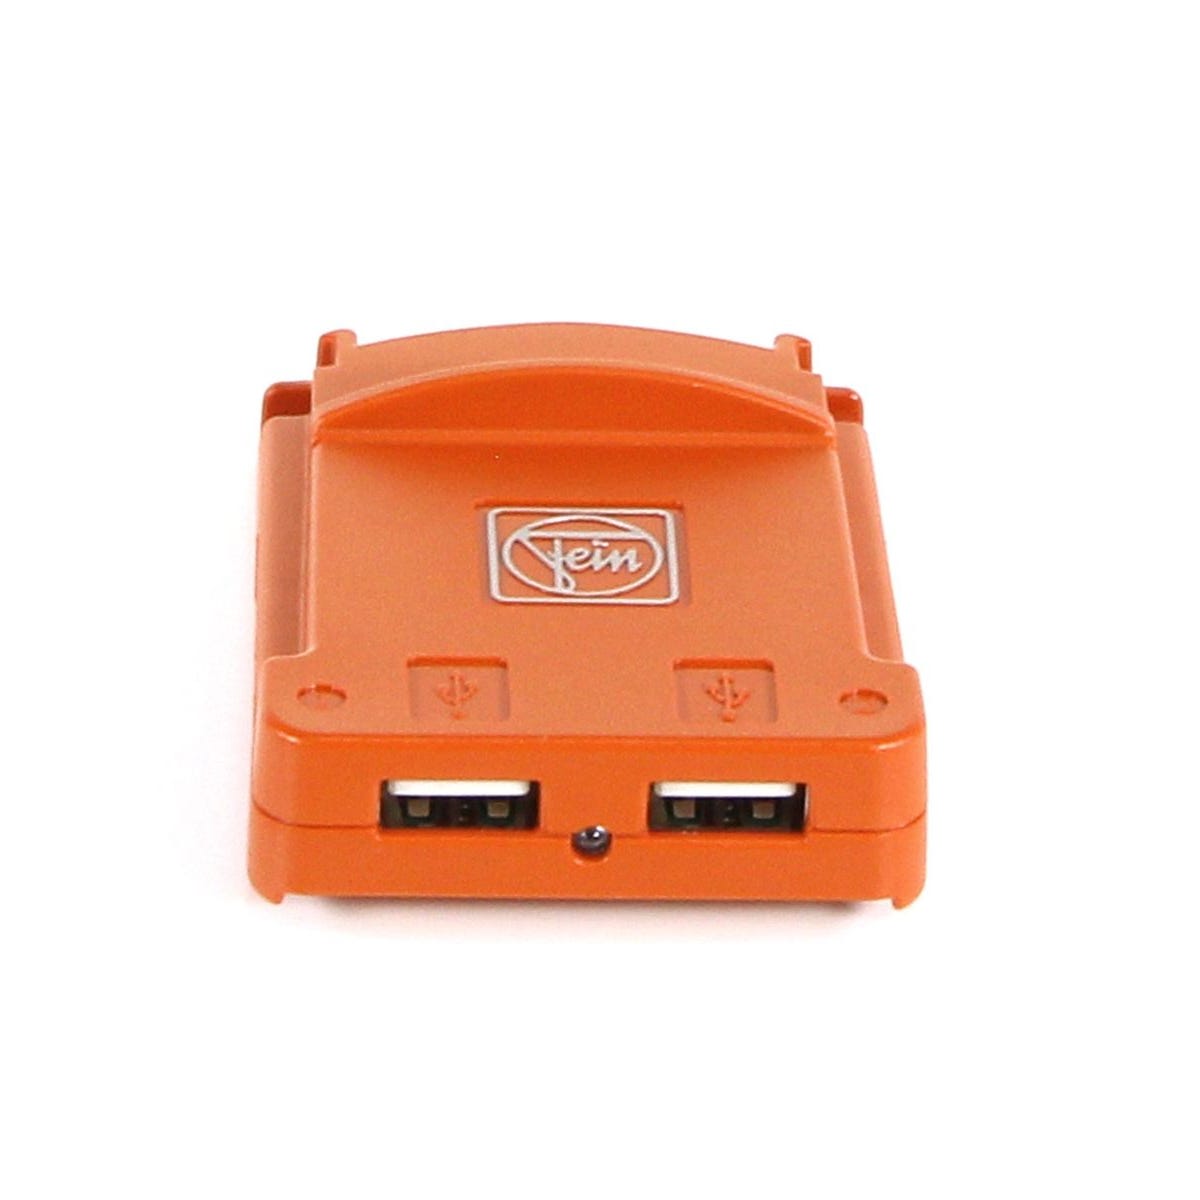 FEIN STARTER SET USB EDITION 18V - 1x Batterie 6,0Ah + USB Adaptateur batterie 1